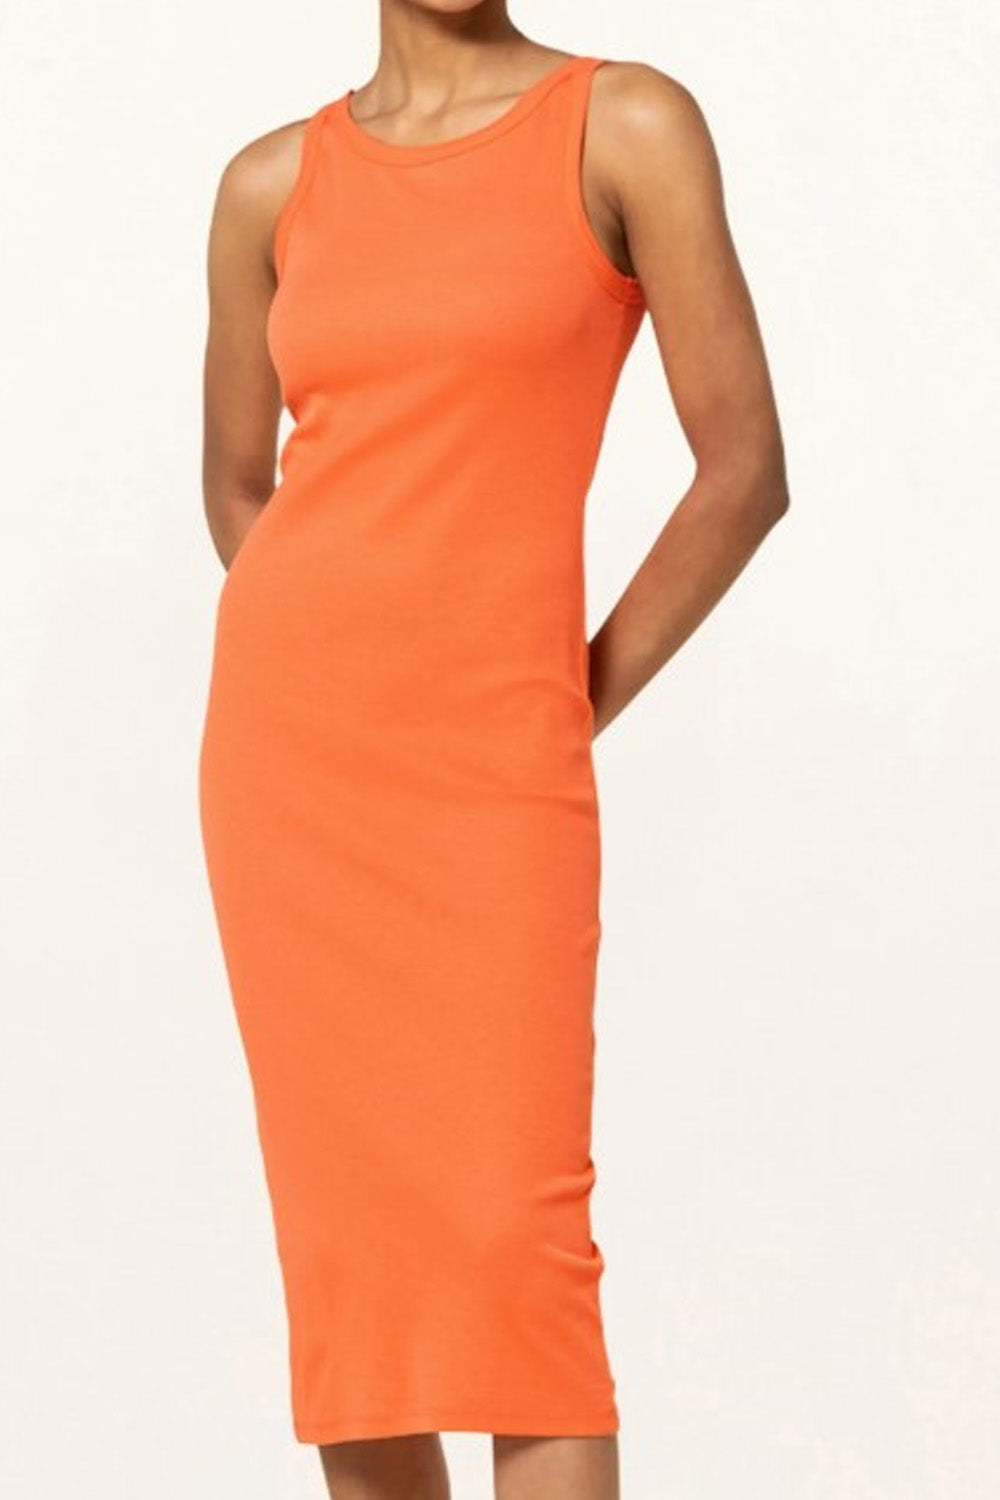 Vistas Orange Dress